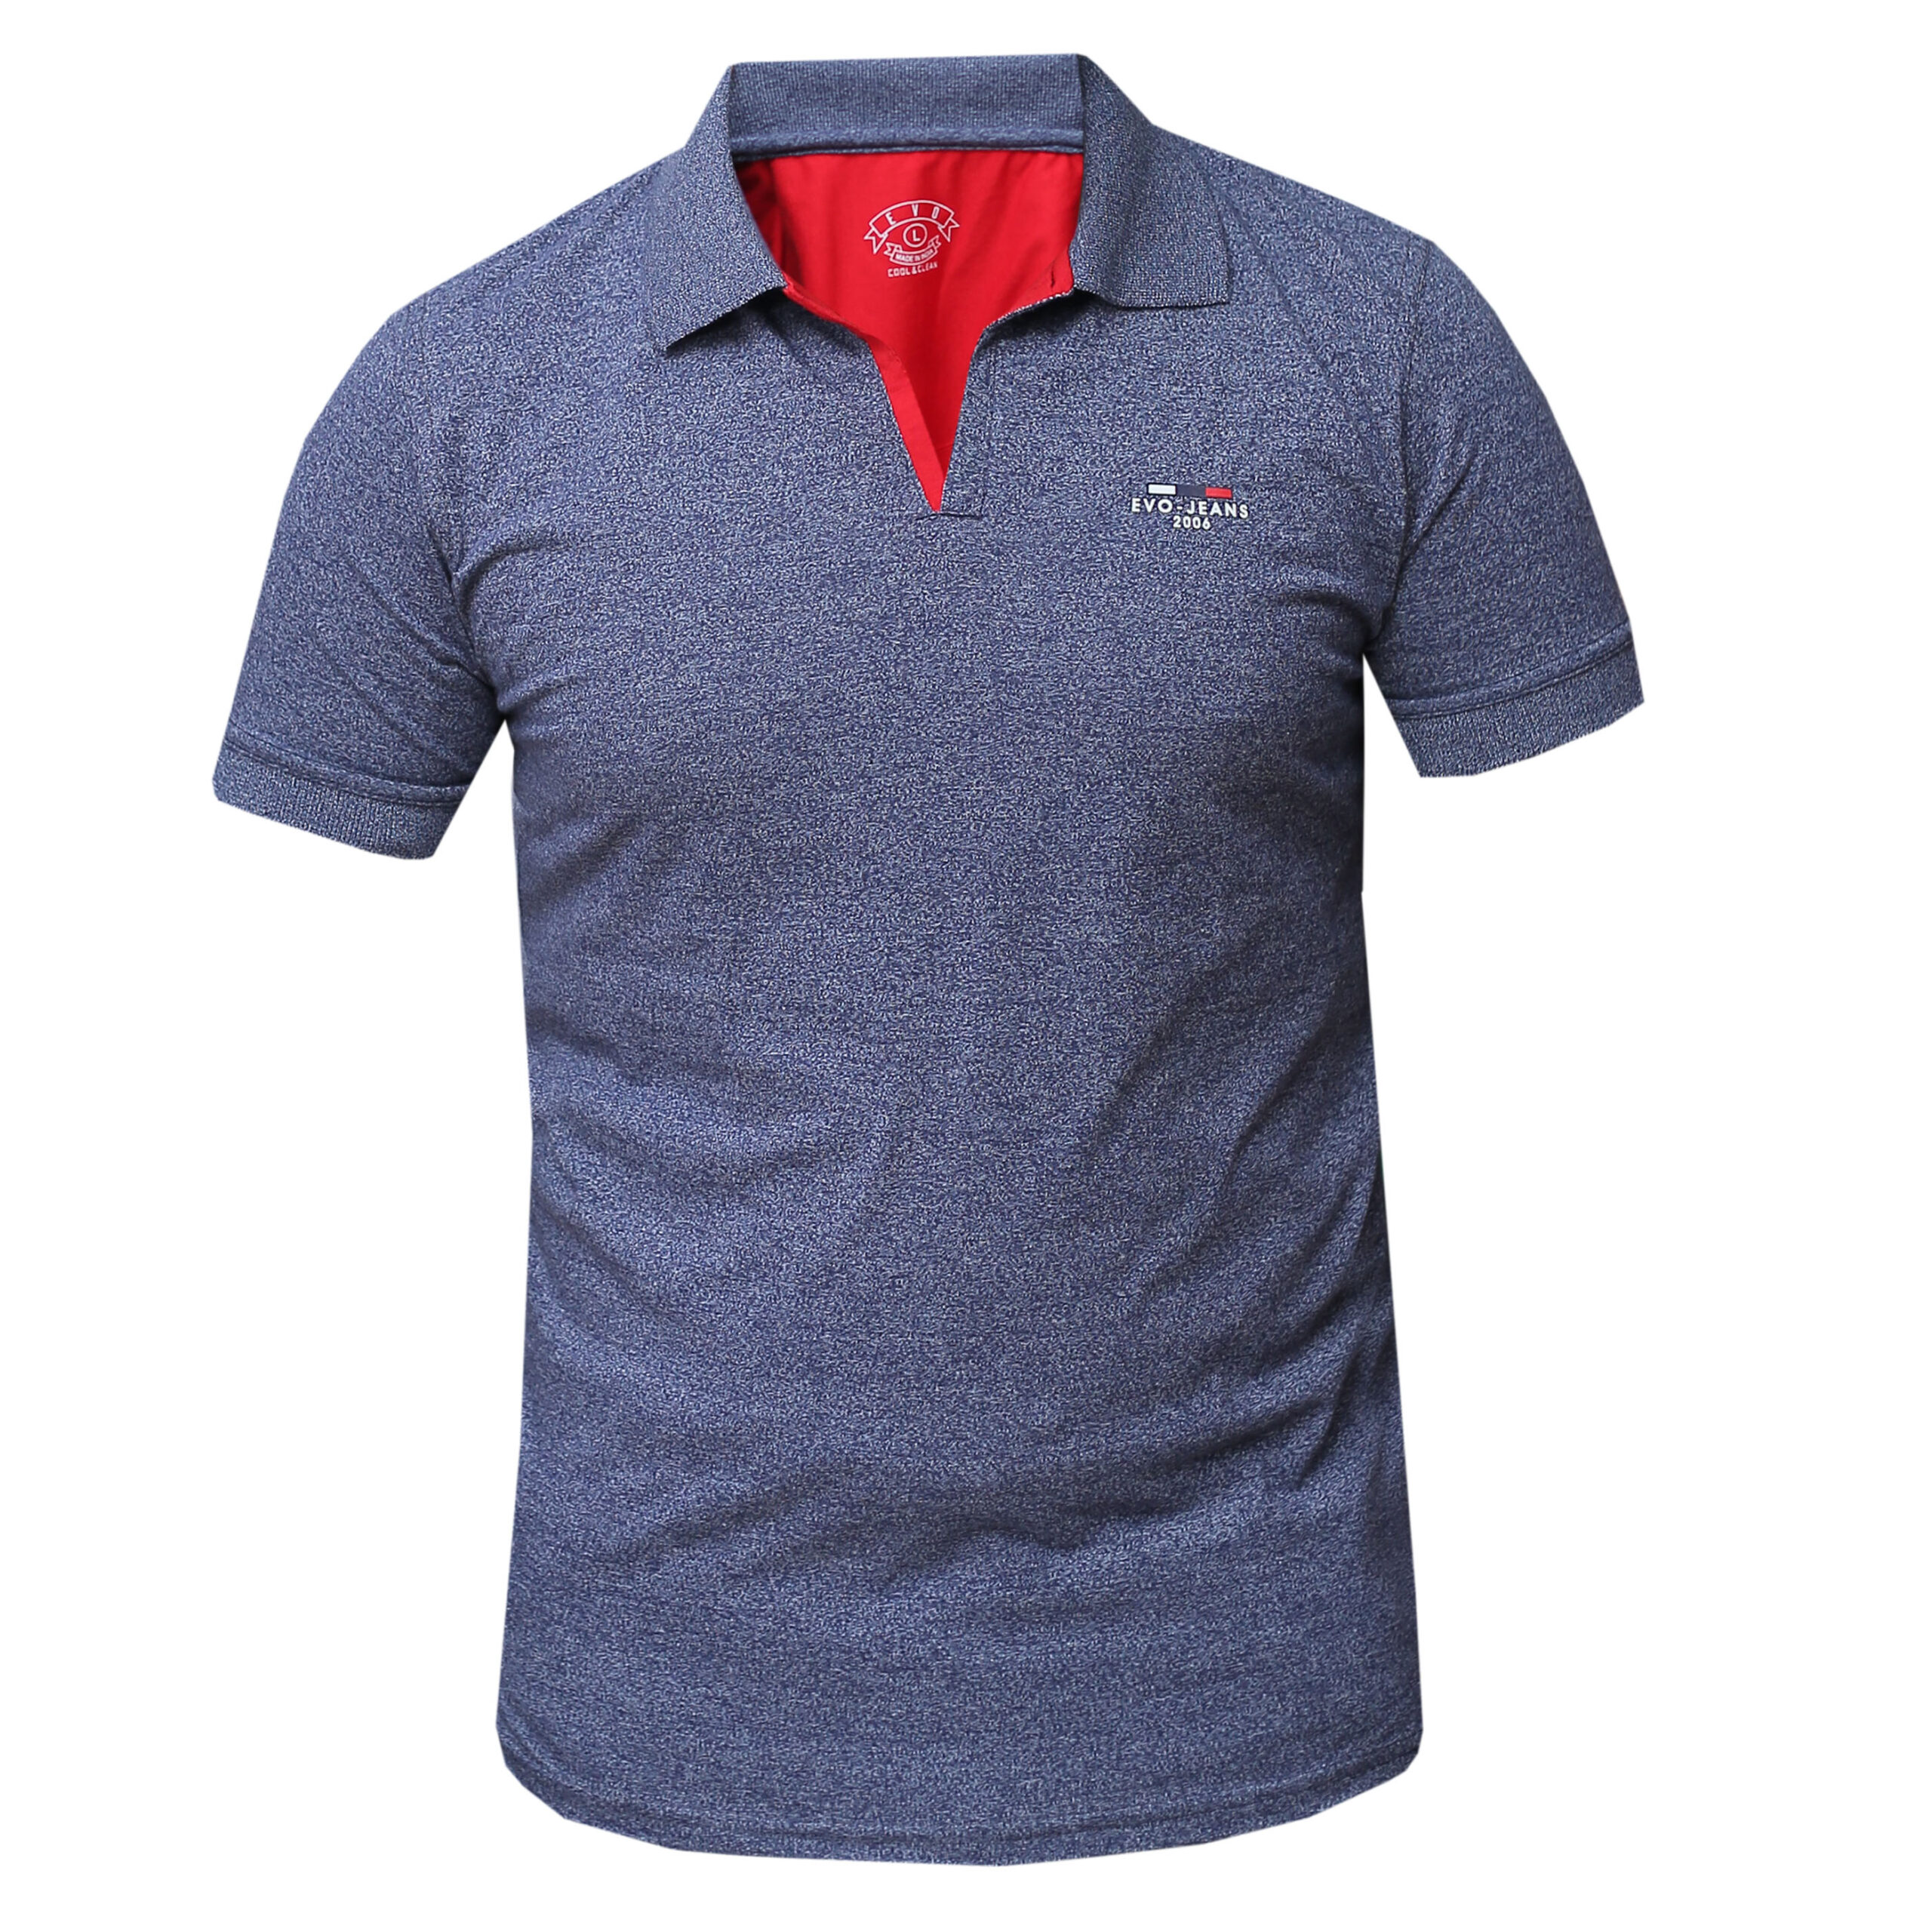 Buttonless Collar T-Shirts for Men